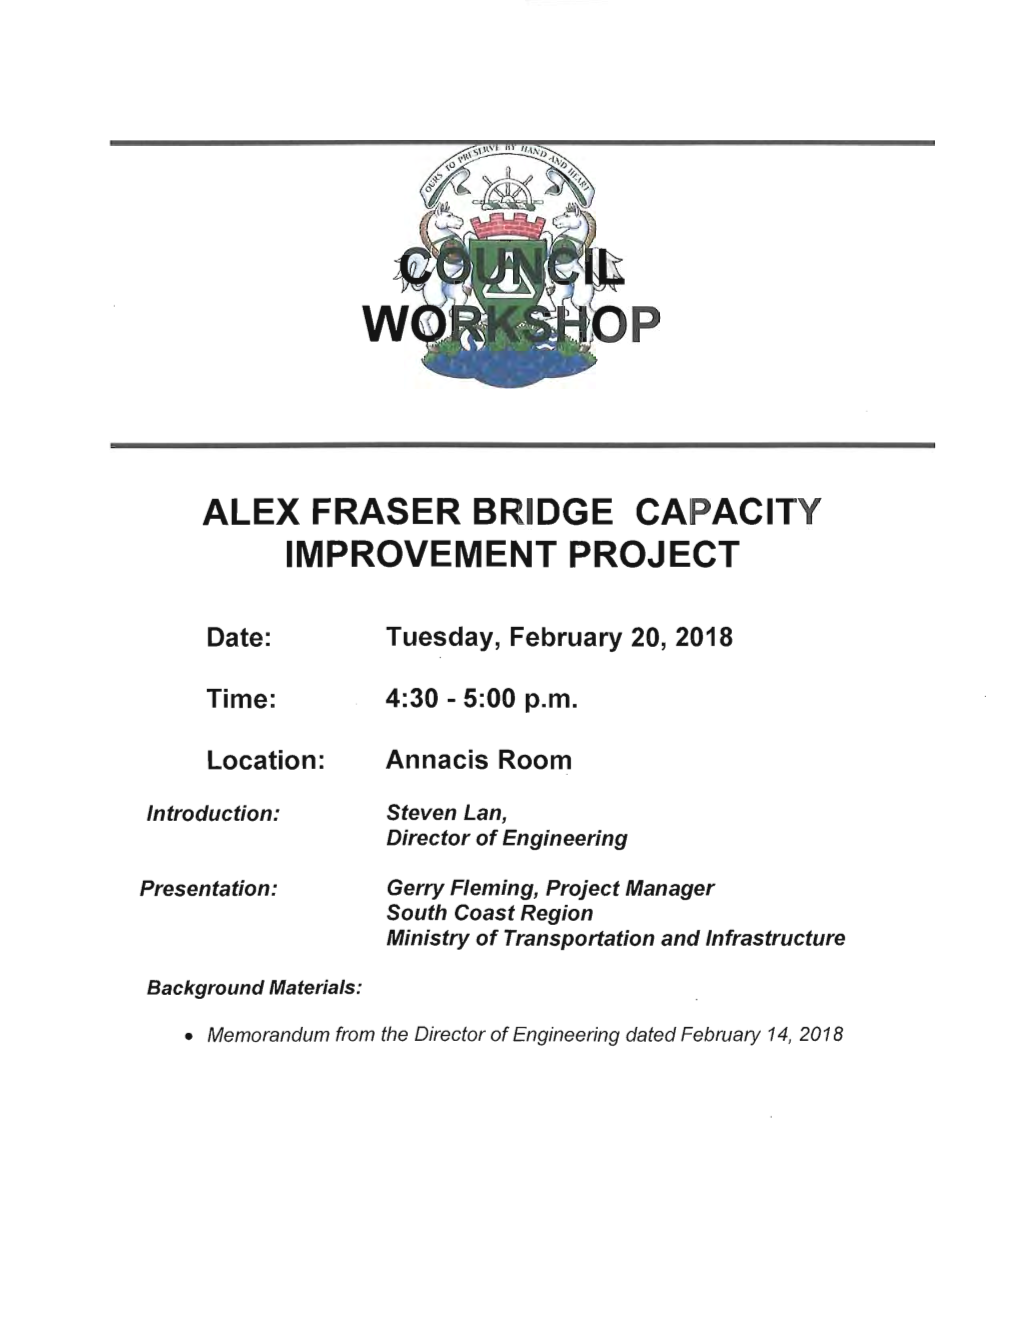 Alex Fraser Bridge Capacity Improvement Project